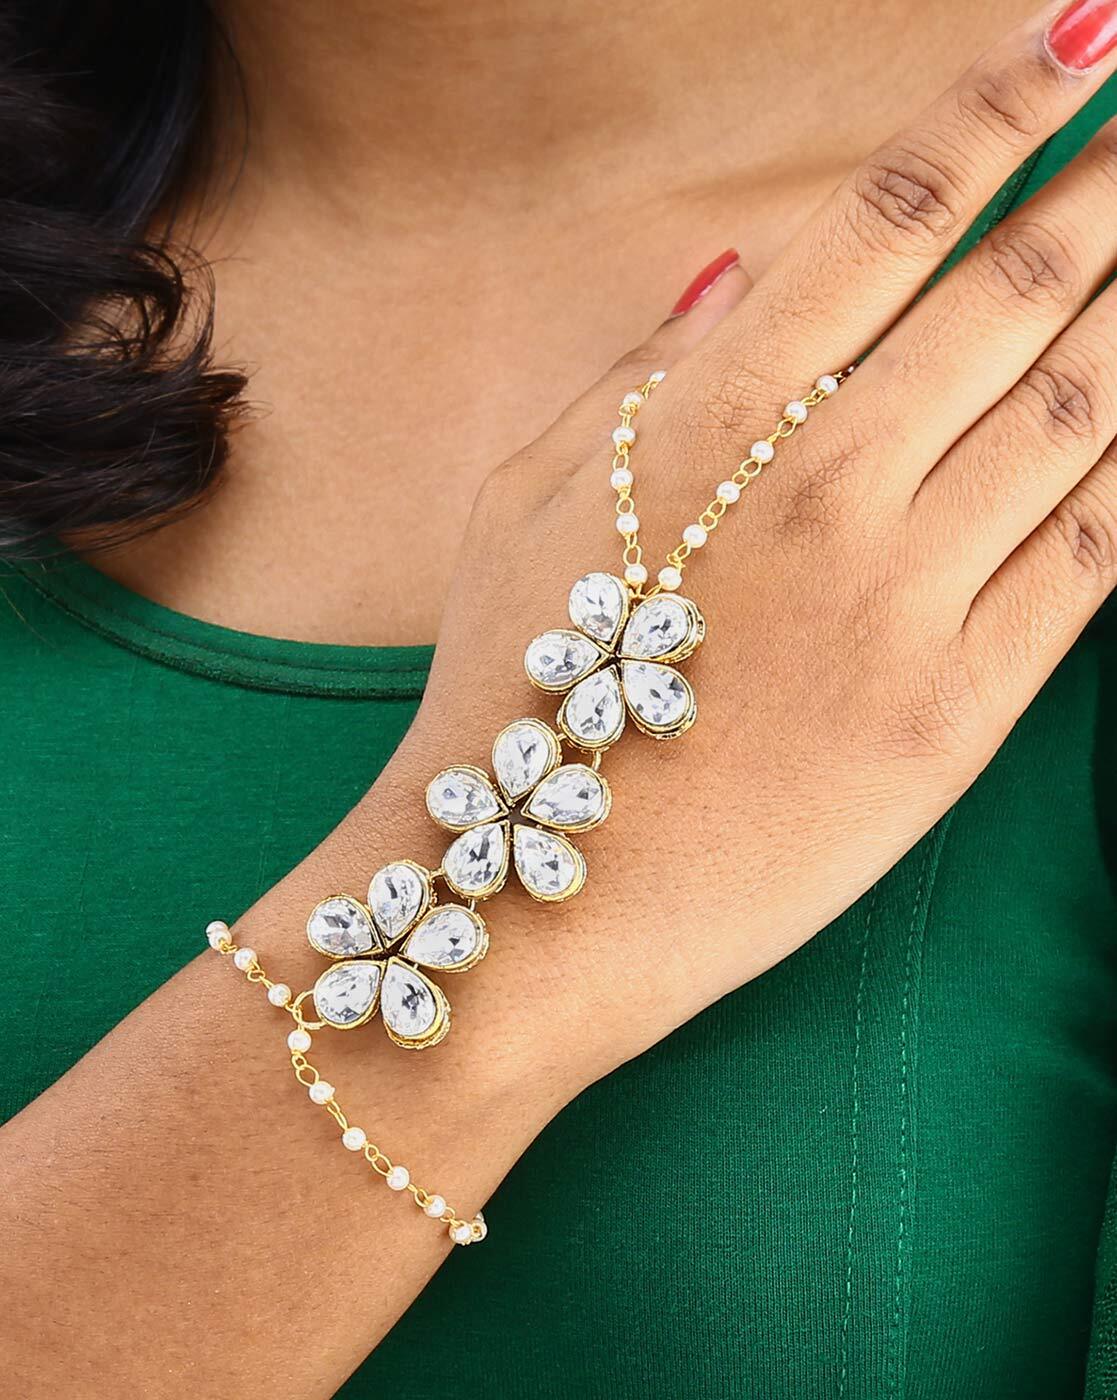 Buy Simple Hand Chain Bracelets in 14K Gold Filled and Sterling Silver FINGER  BRACELET Online in India - Etsy